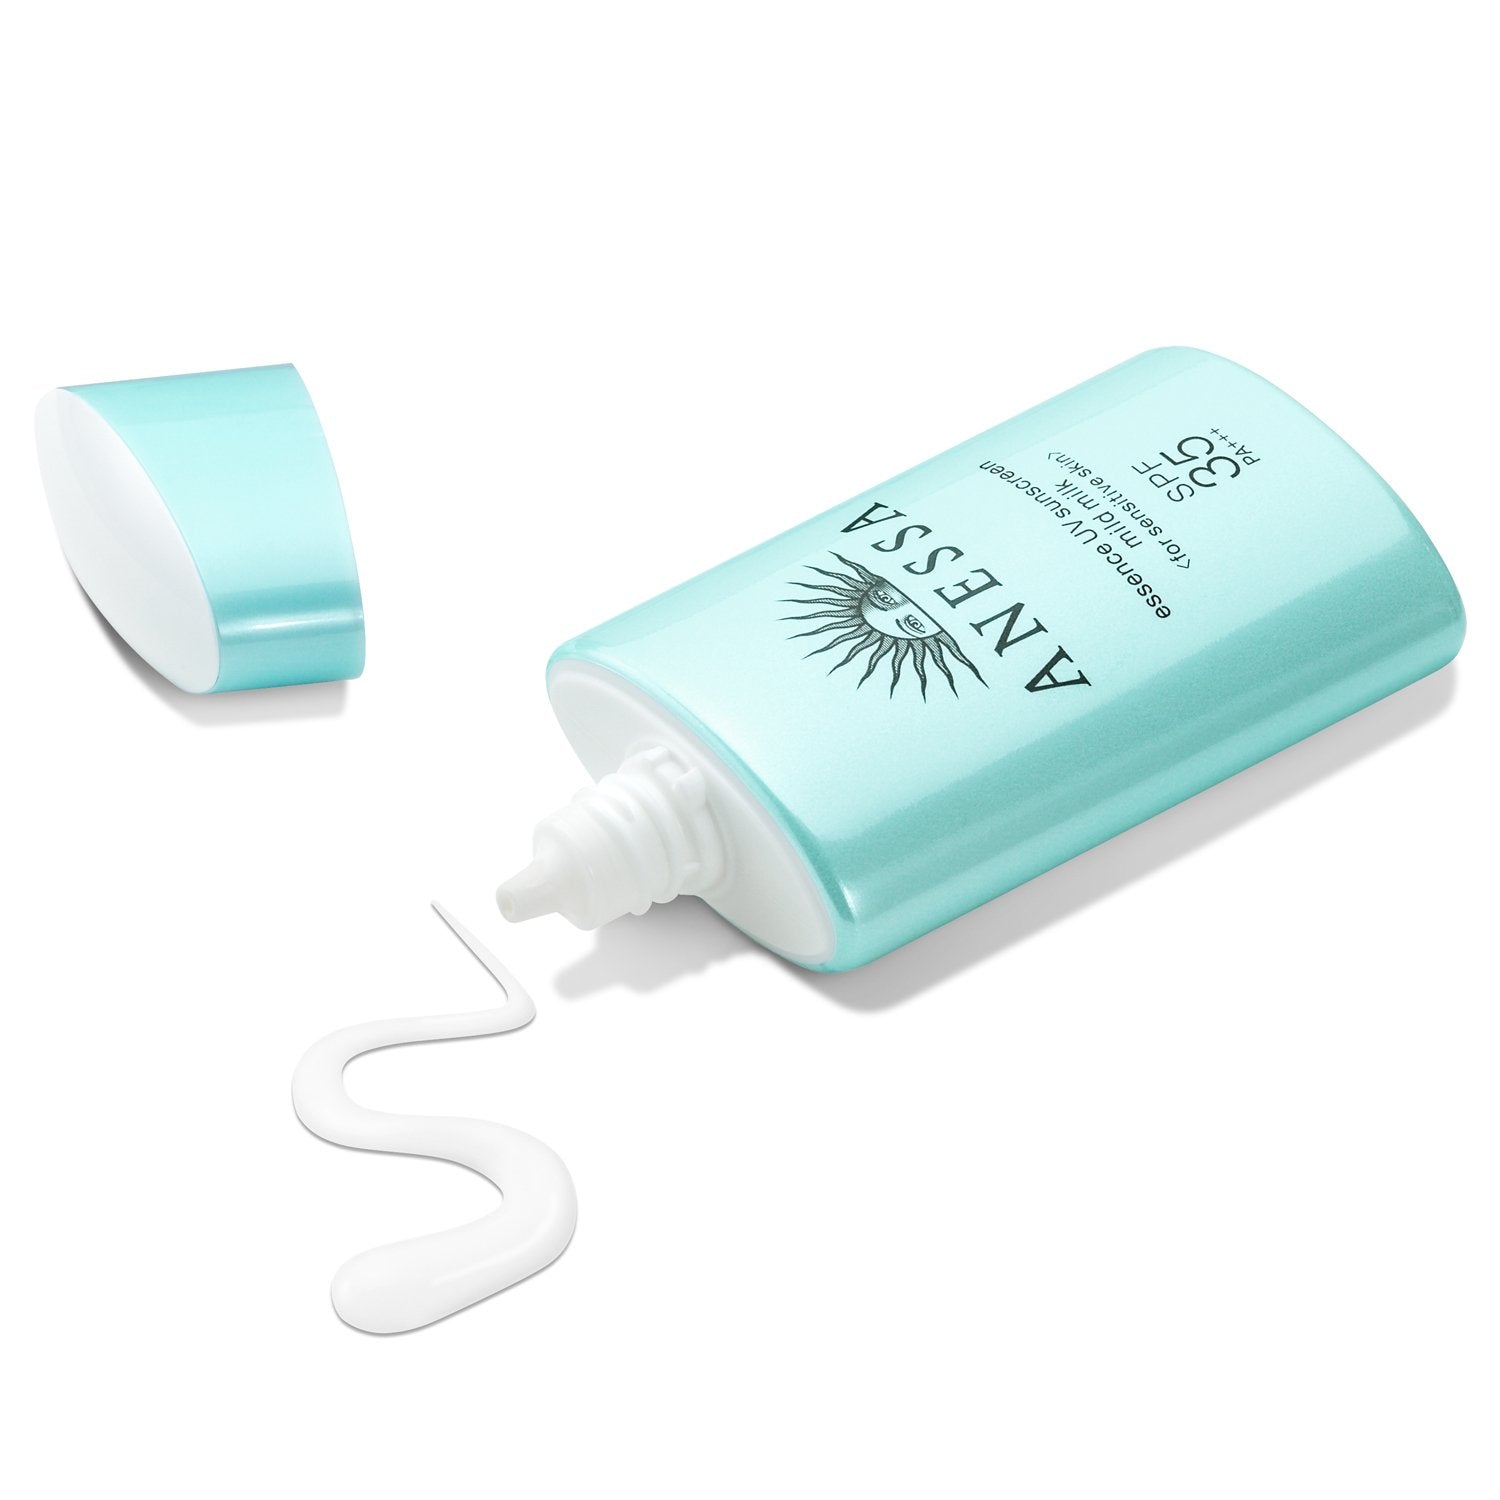 Anessa Essence UV Sunscreen Mild Milk For Sensitive Skin SPF 35 PA+++ Beauty Shiseido   